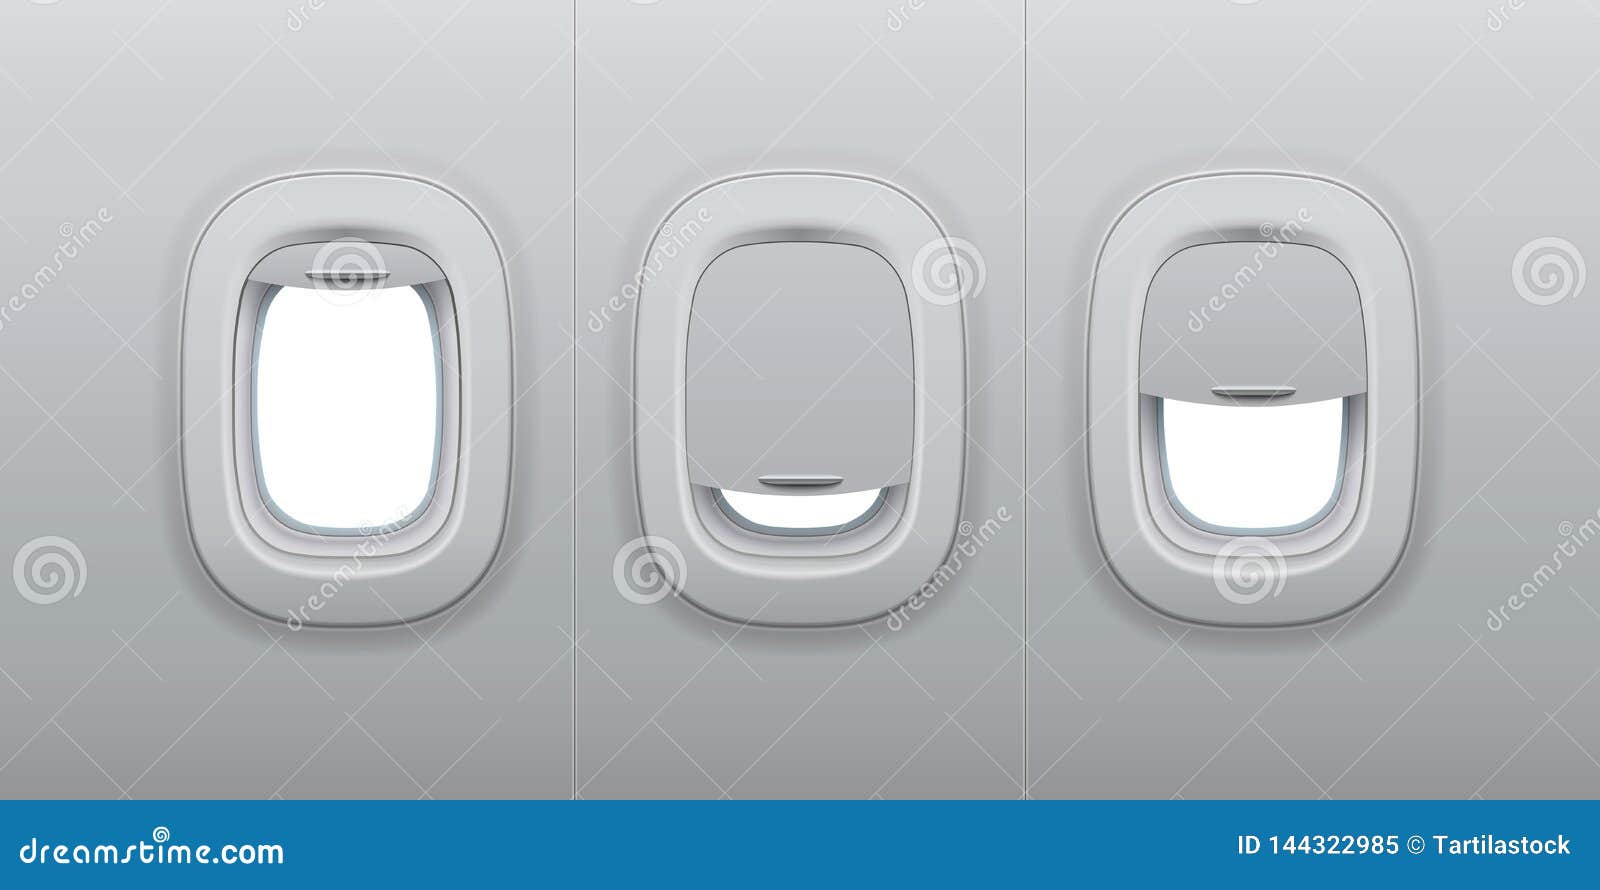 aircraft windows. airplane indoor portholes, plane interior window and fuselage glass porthole 3d  